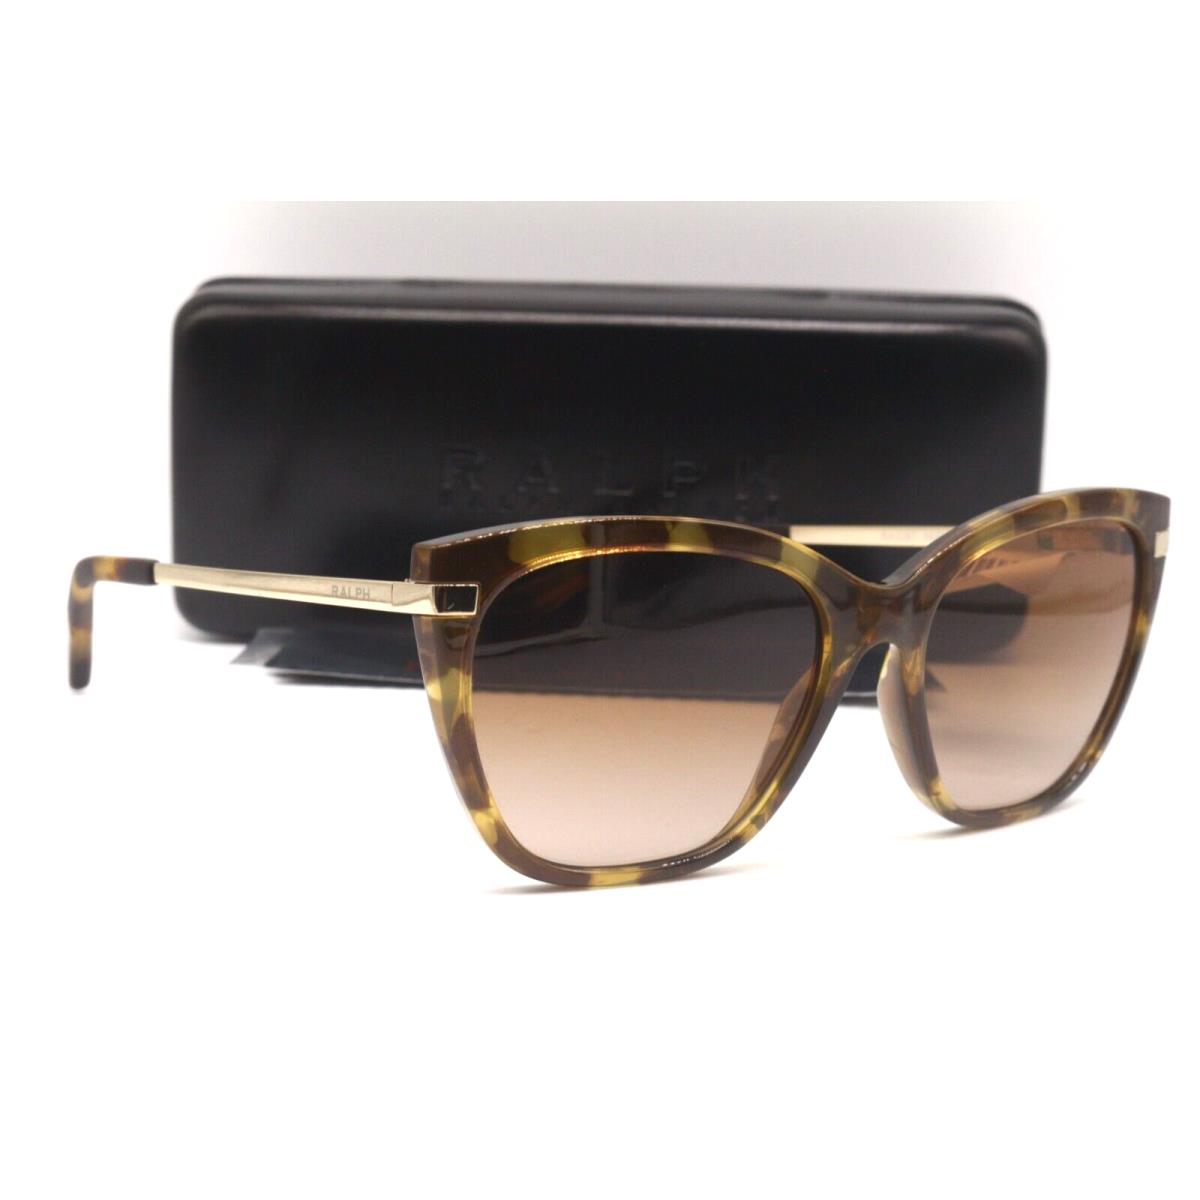 Ralph Lauren RA 5267 5836/13 Havana Gold/gradient Lenses Sunglasses 56-17